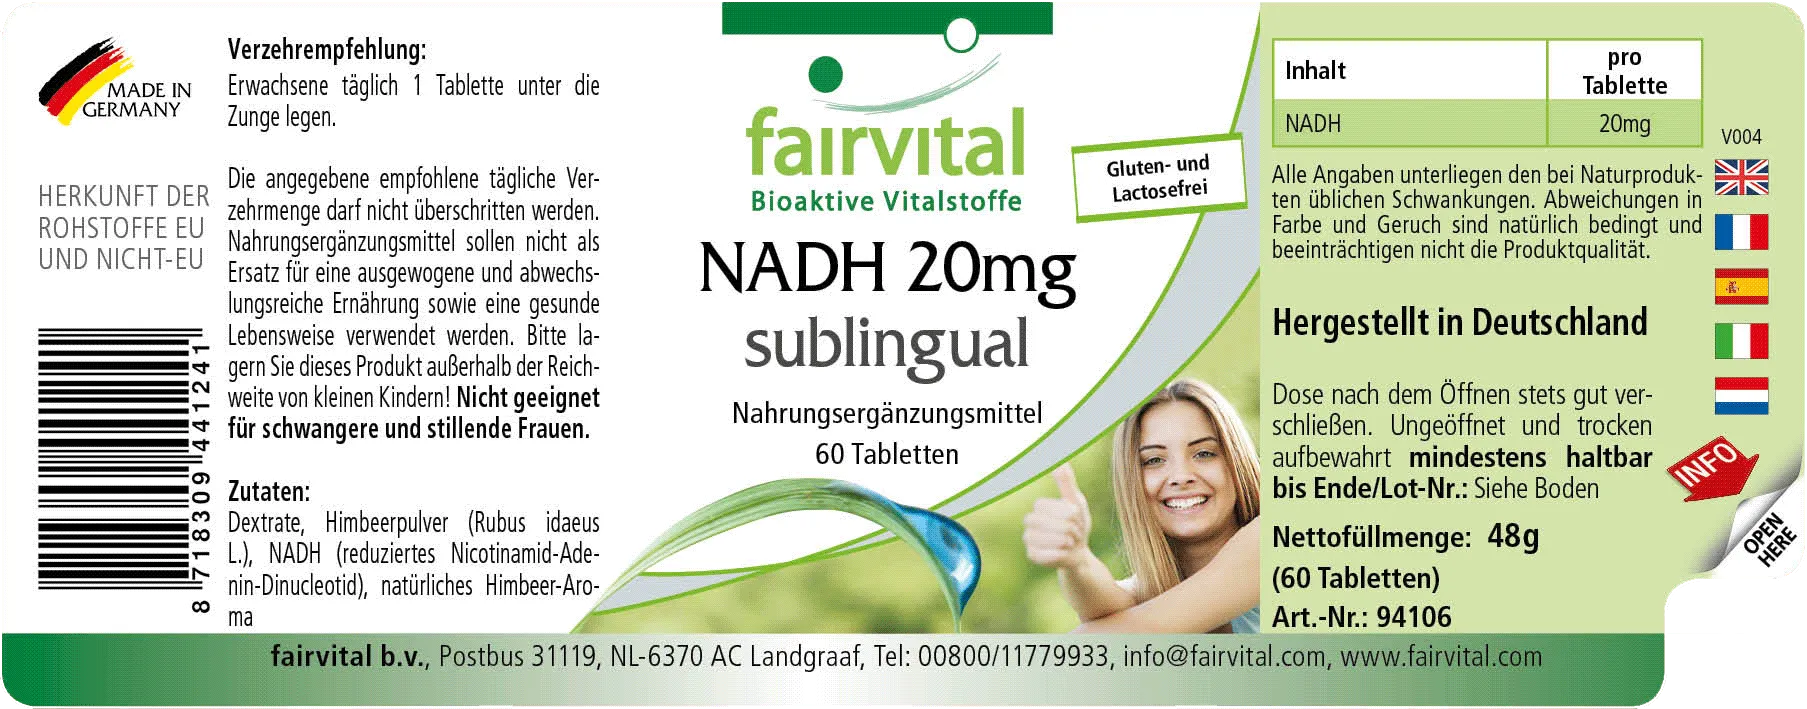 NADH 20mg sublingual – 60 tablets